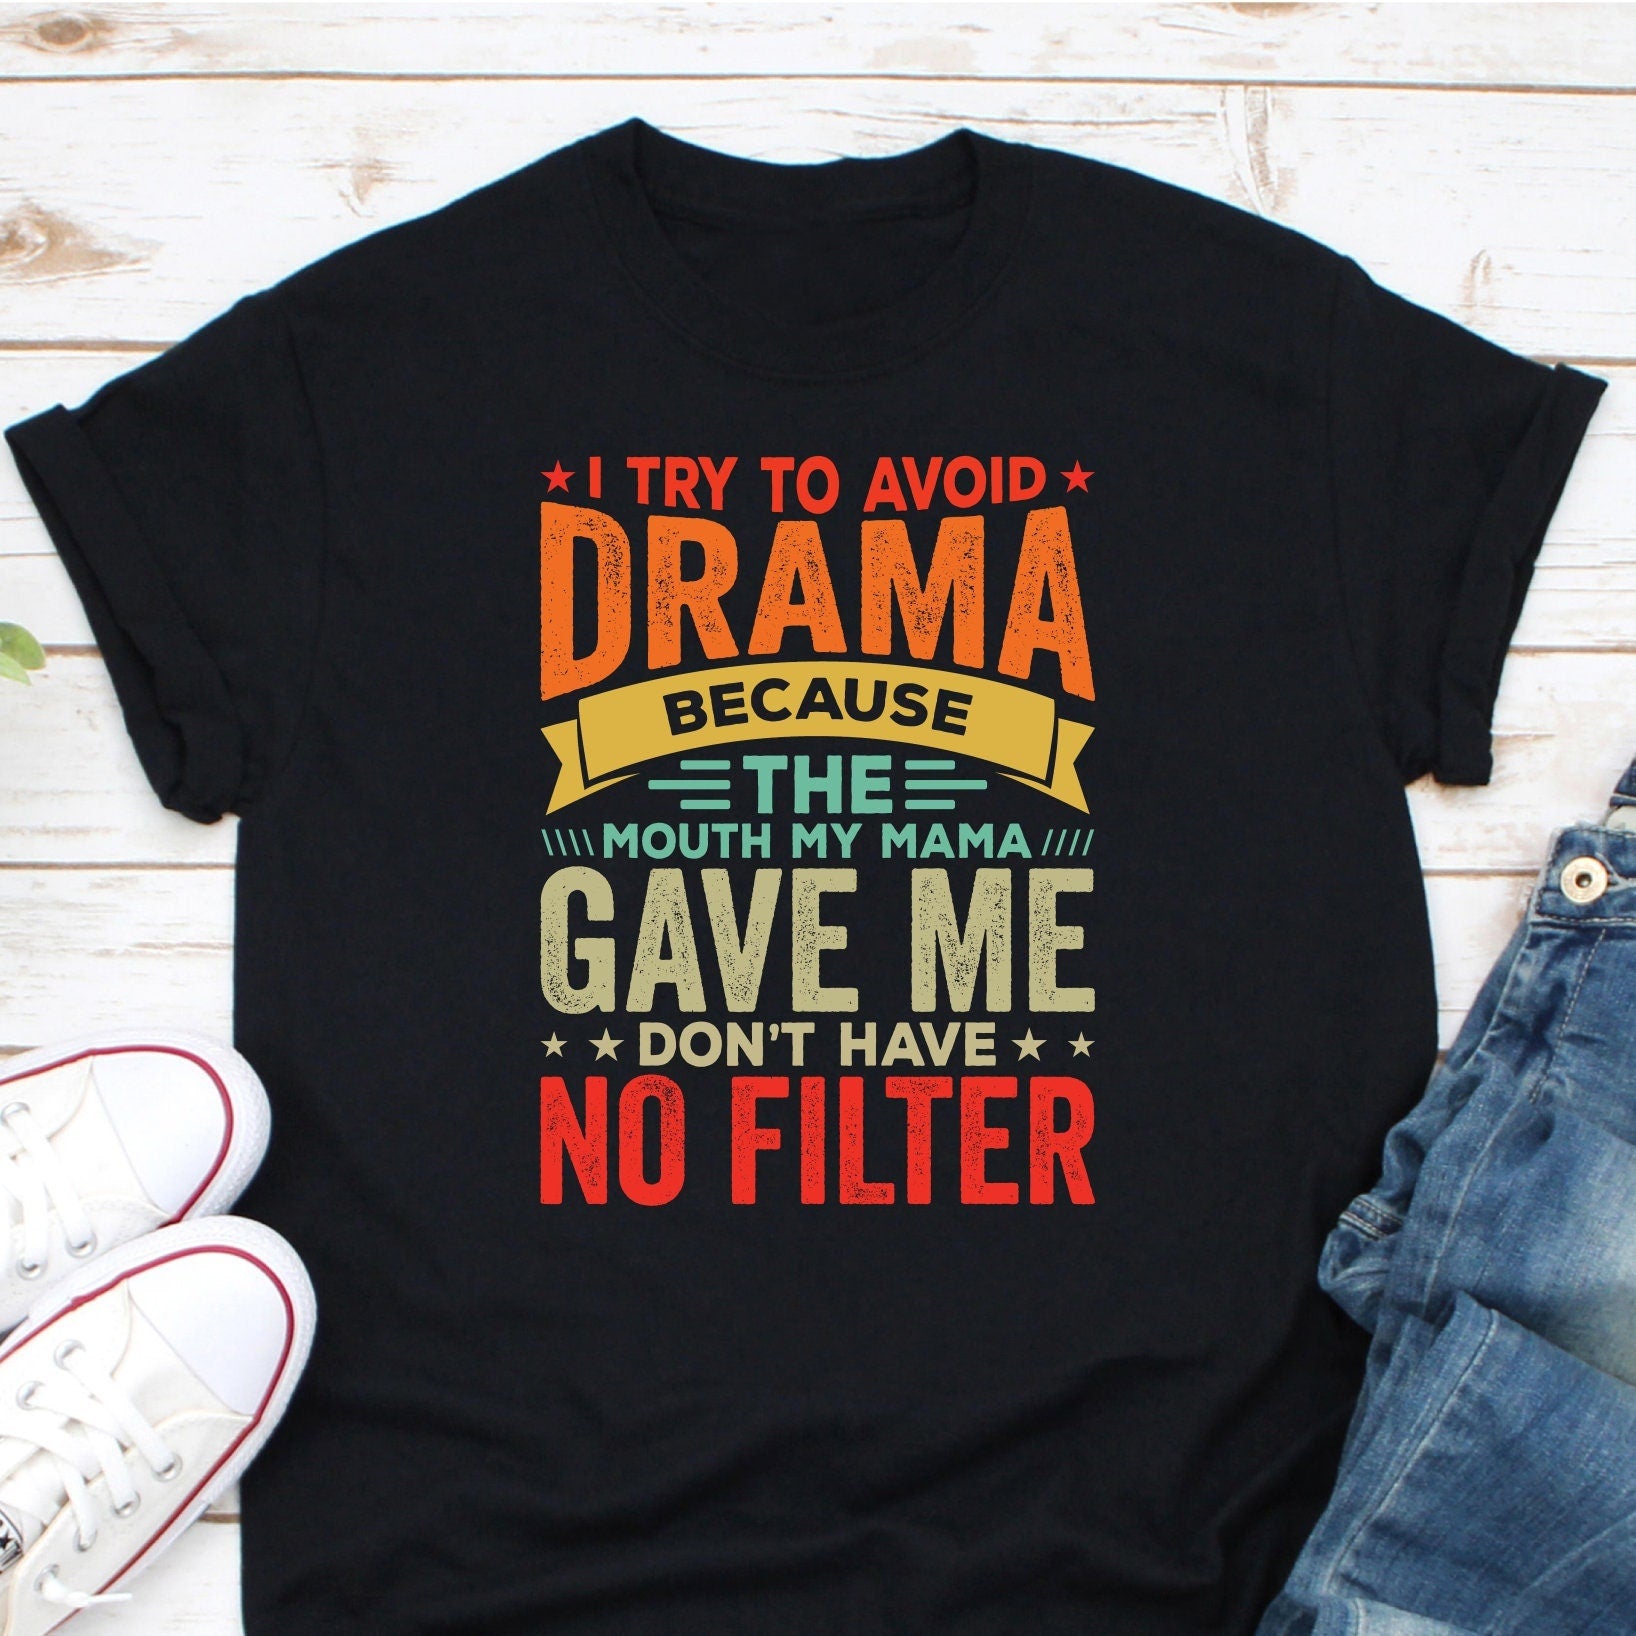 I Try To Avoid Drama Shirt, Adult Humor Shirt, Anti-Social Shirt, Hilarious Shirt, Humorous Shirt